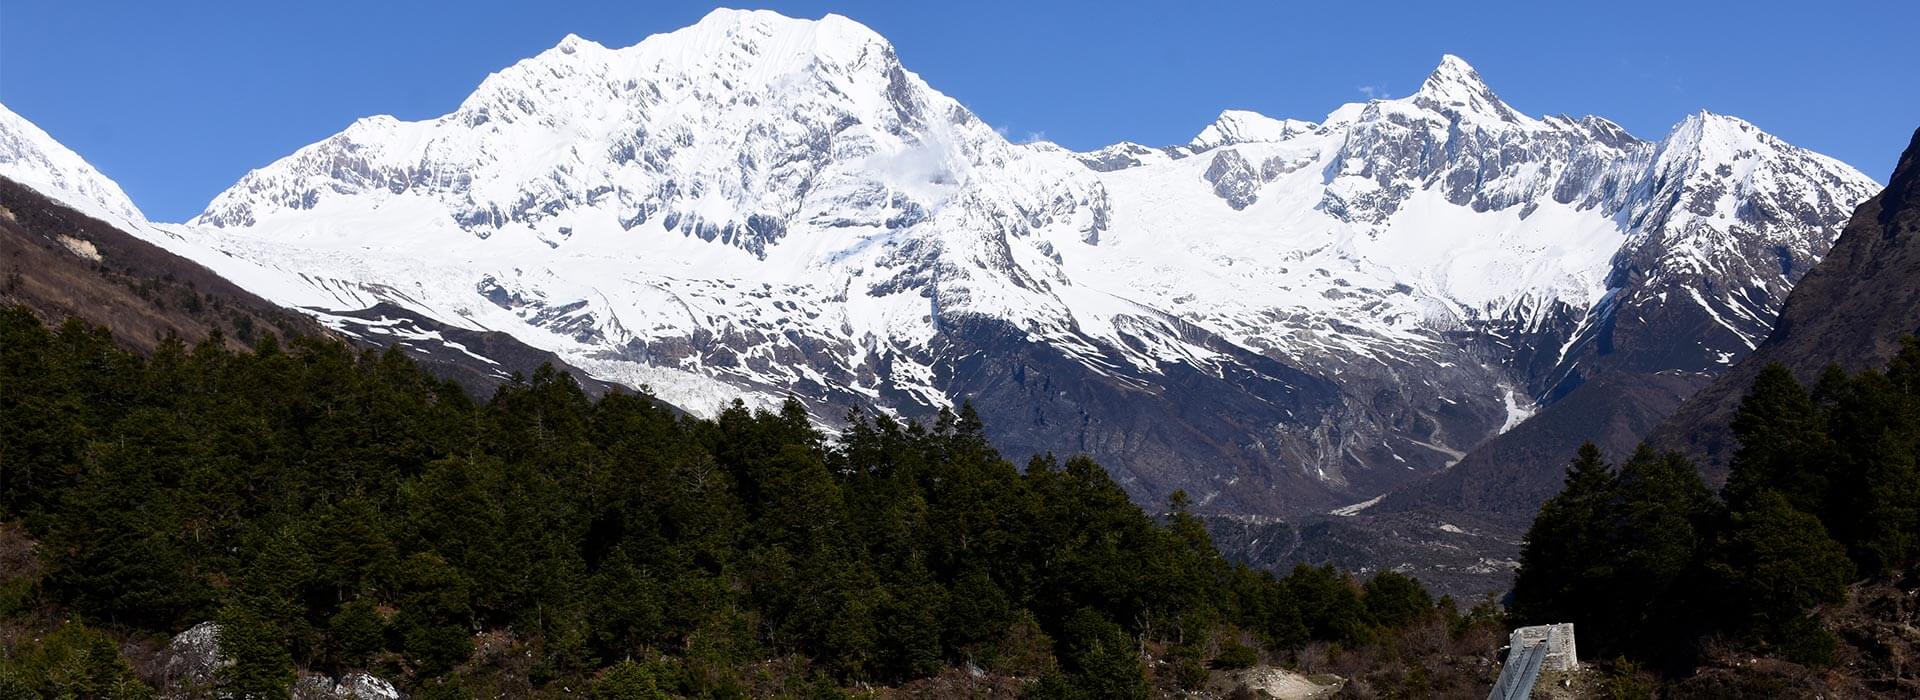 Ridge Hike of Kathmandu Valley